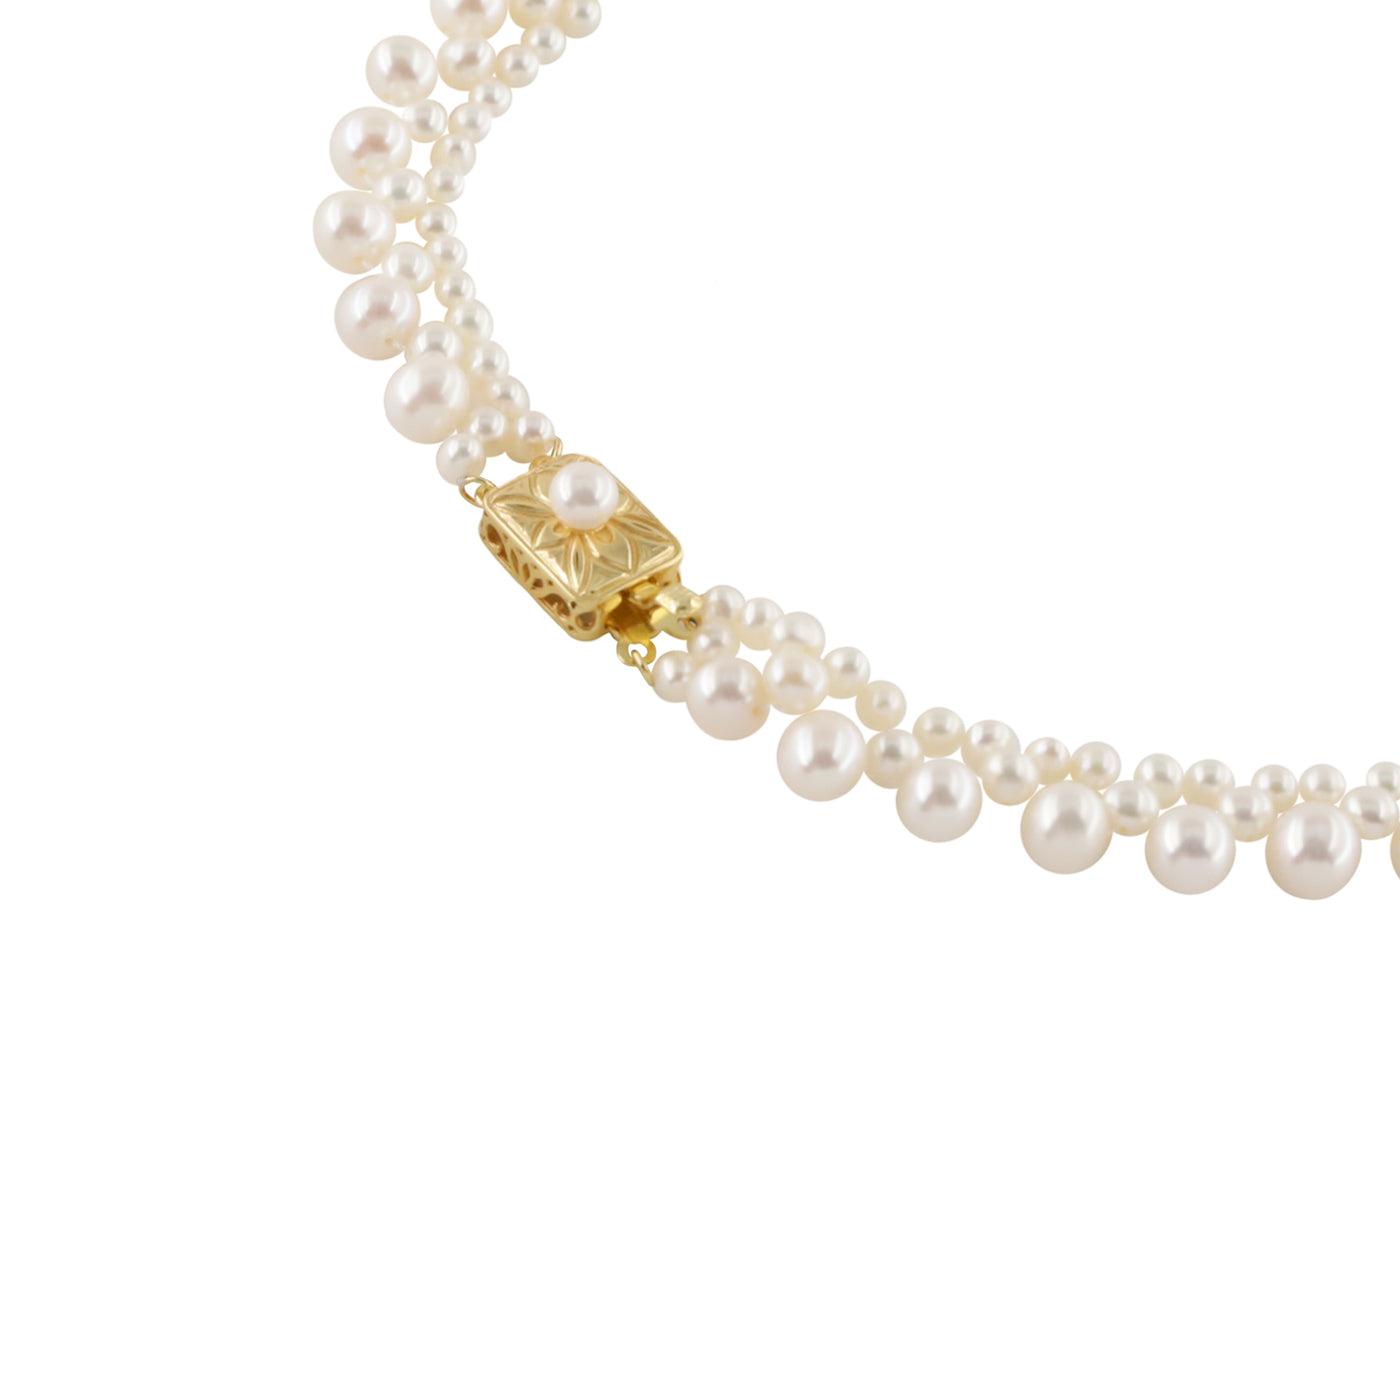 Victorial Pearl Necklace | Angela Jewellery Australia